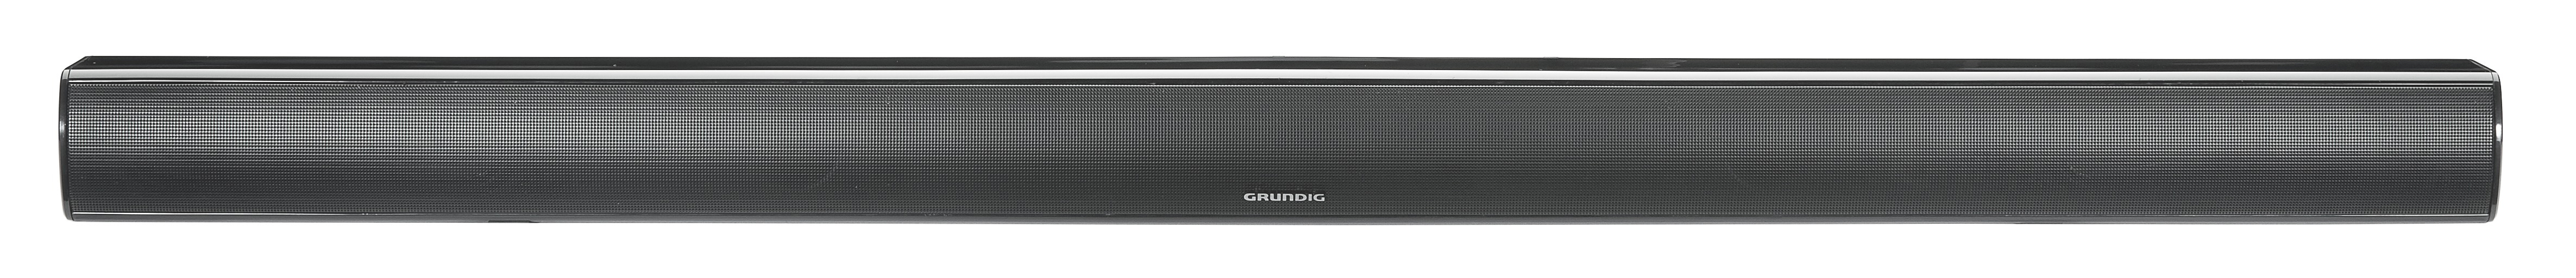 GRUNDIG DSB 950, Smart Soundbar, Schwarz